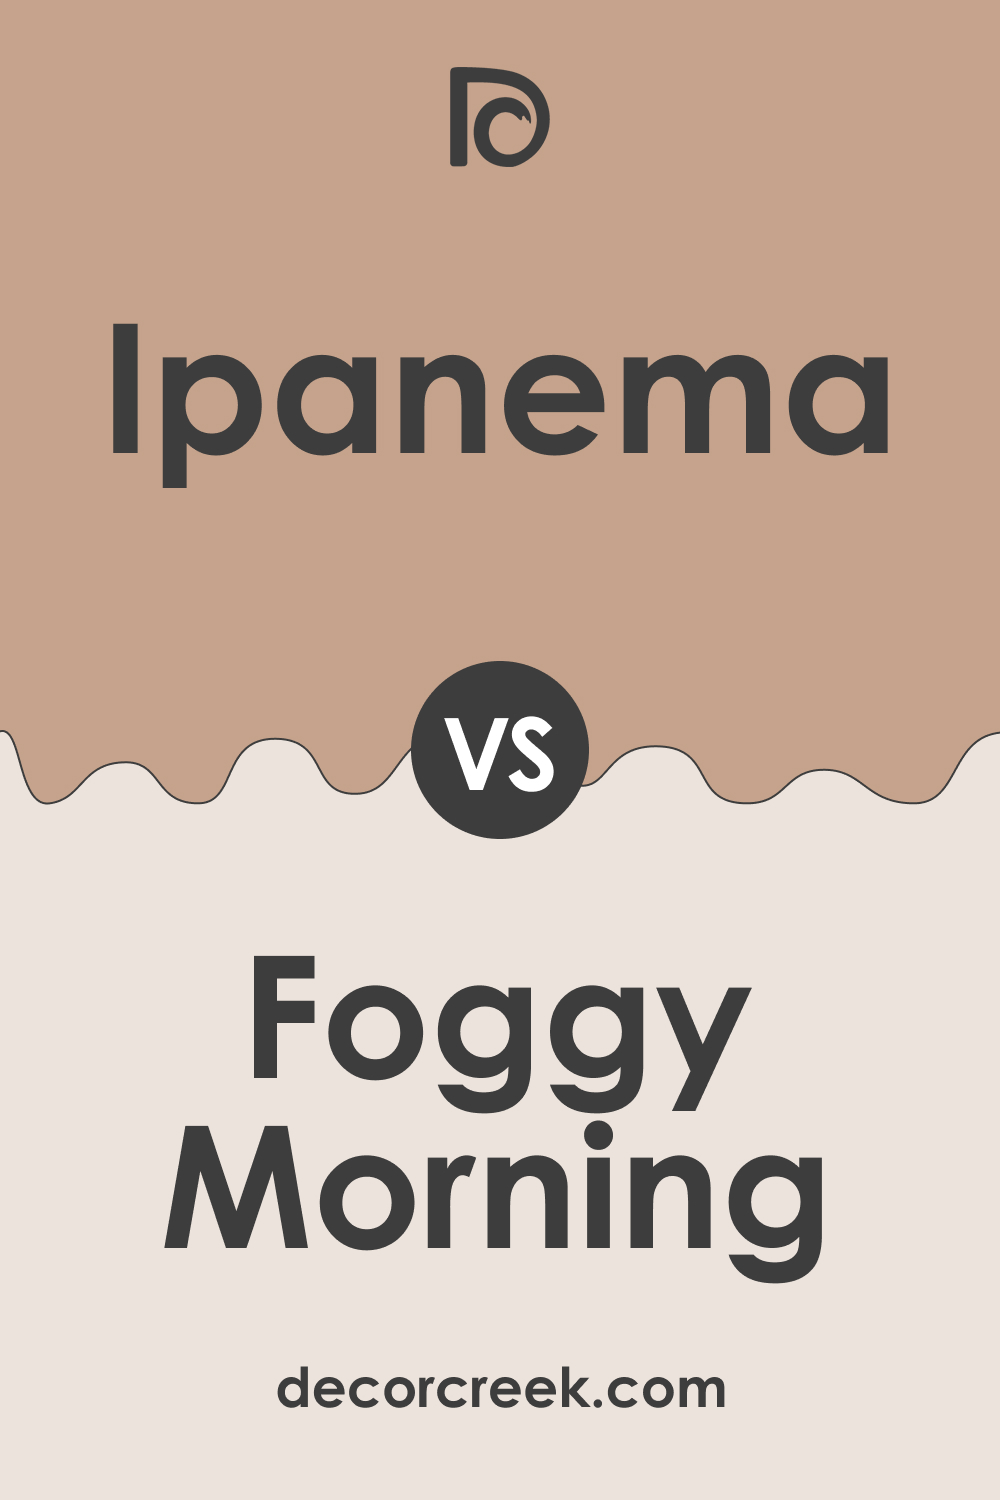 Ipanema AF-245 vs. BM 2106-70 Foggy Morning